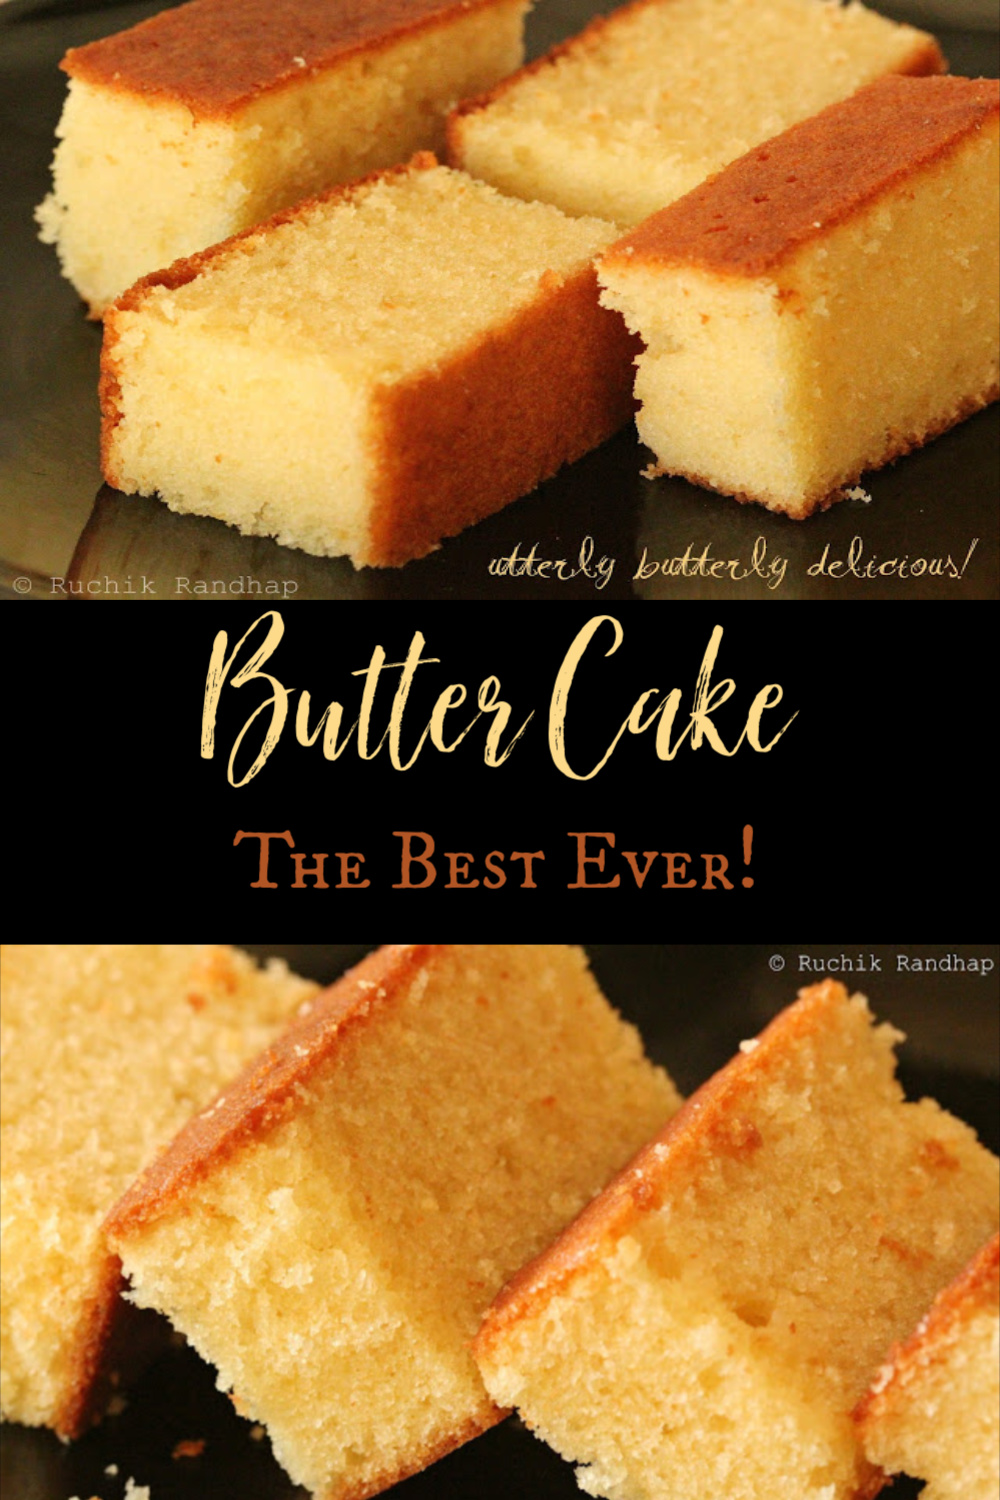 Classic butter cake